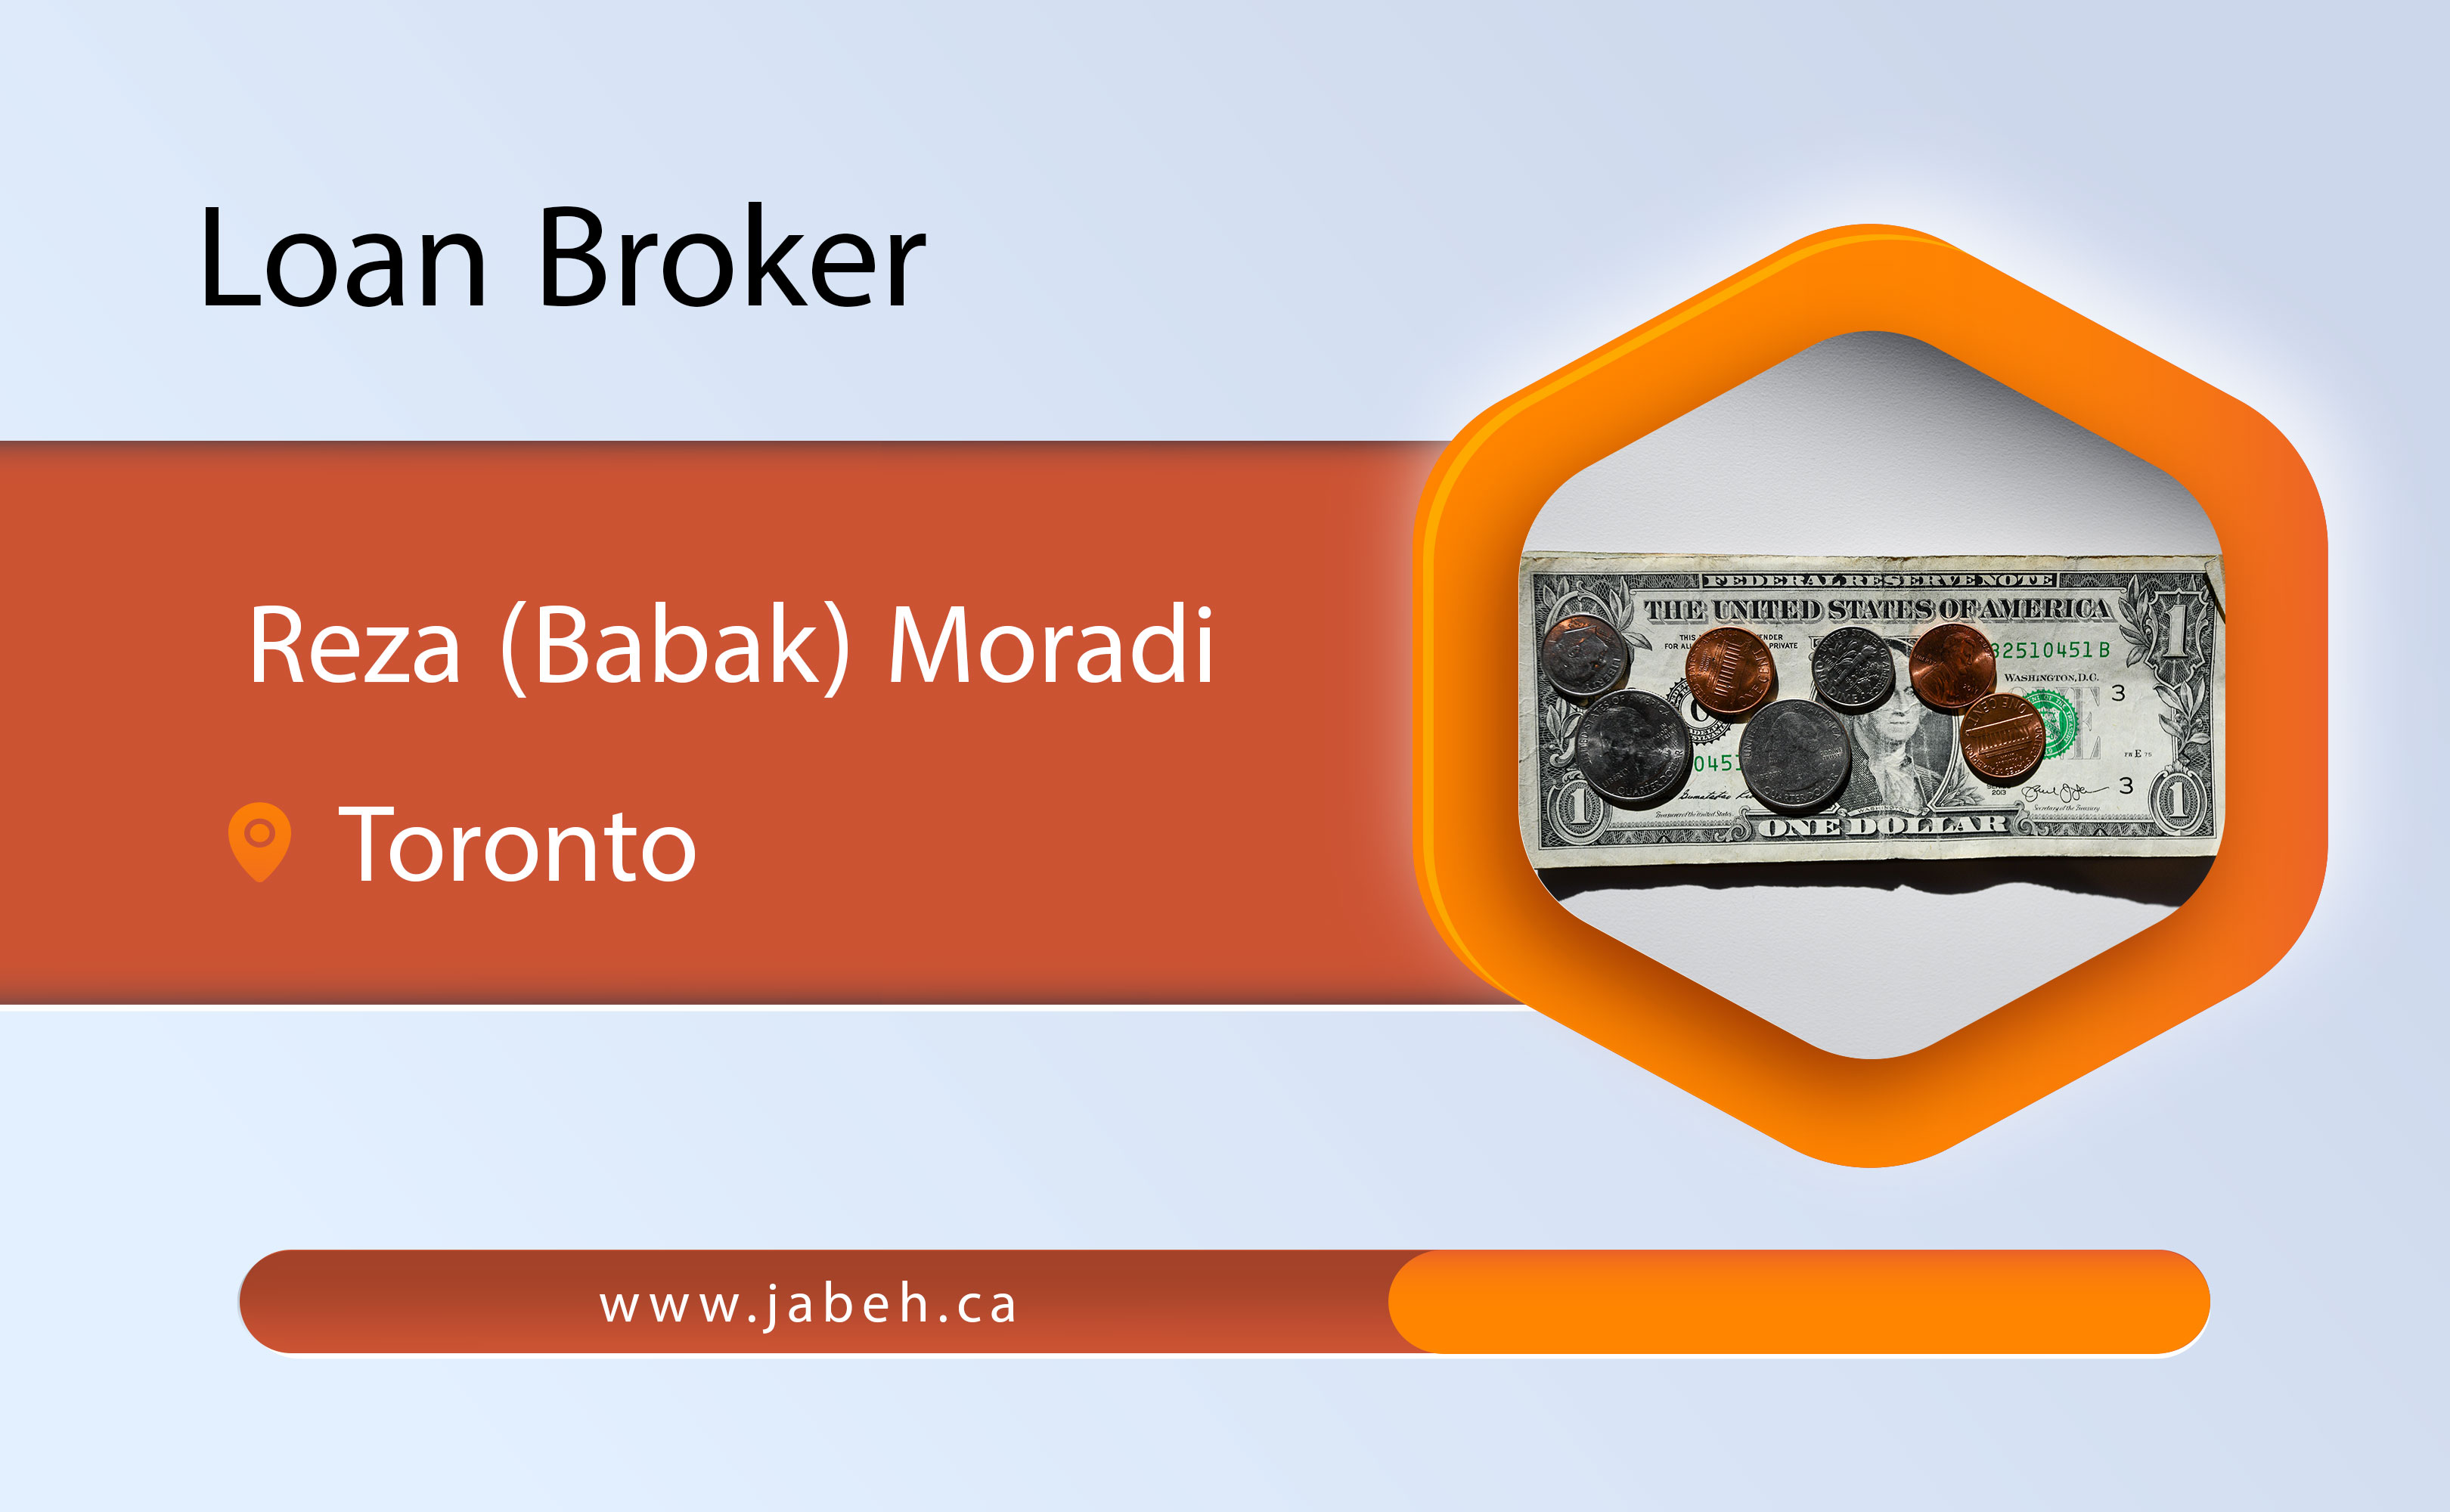 Iranian loan broker Reza (Babak) Moradi in Toronto